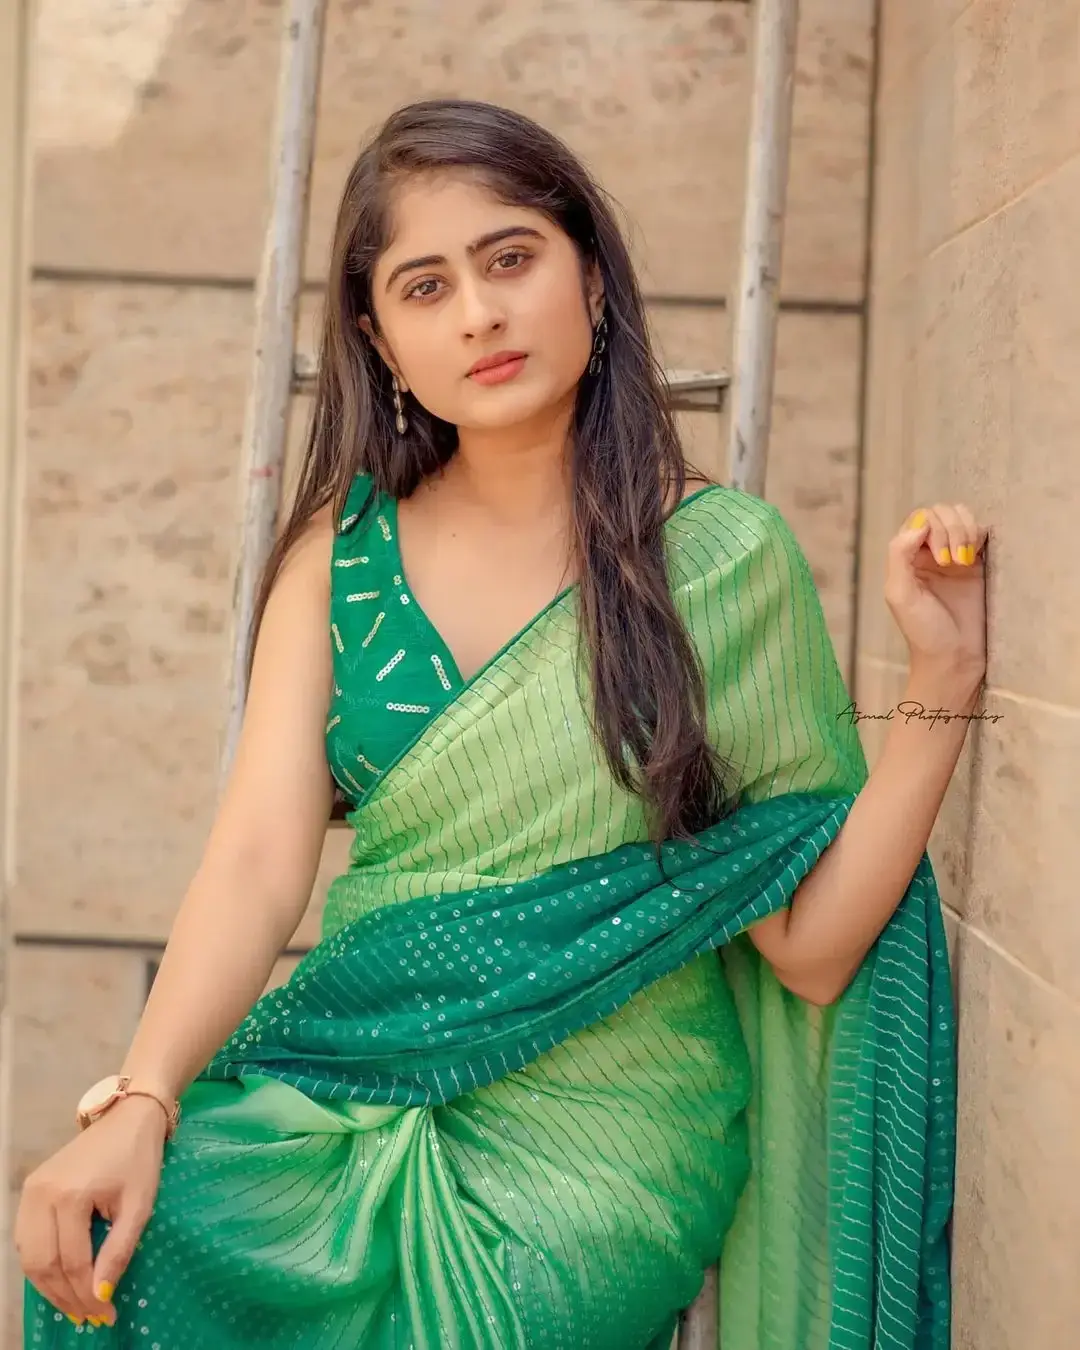 INDIAN TV ACTRESS KRISHNA PRIYA NAIR IMAGES IN GREEN SAREE